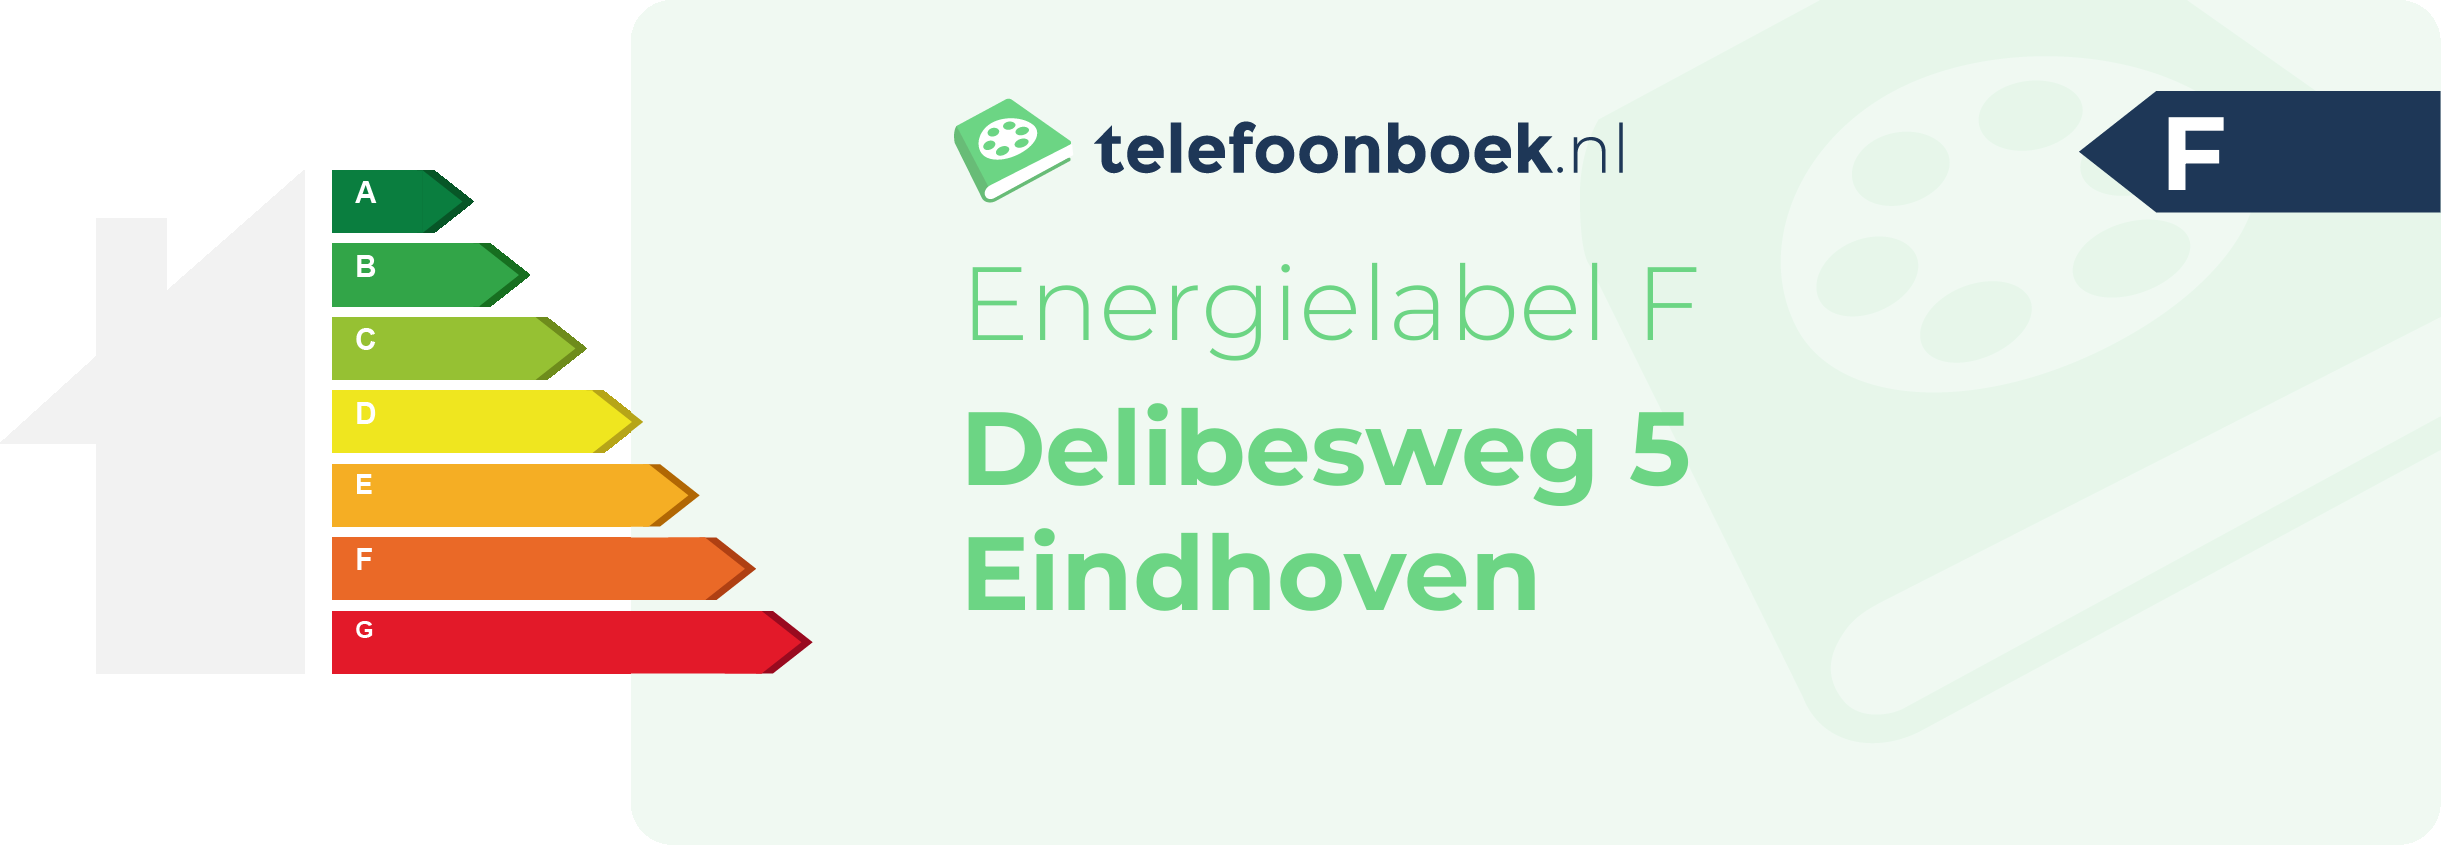 Energielabel Delibesweg 5 Eindhoven